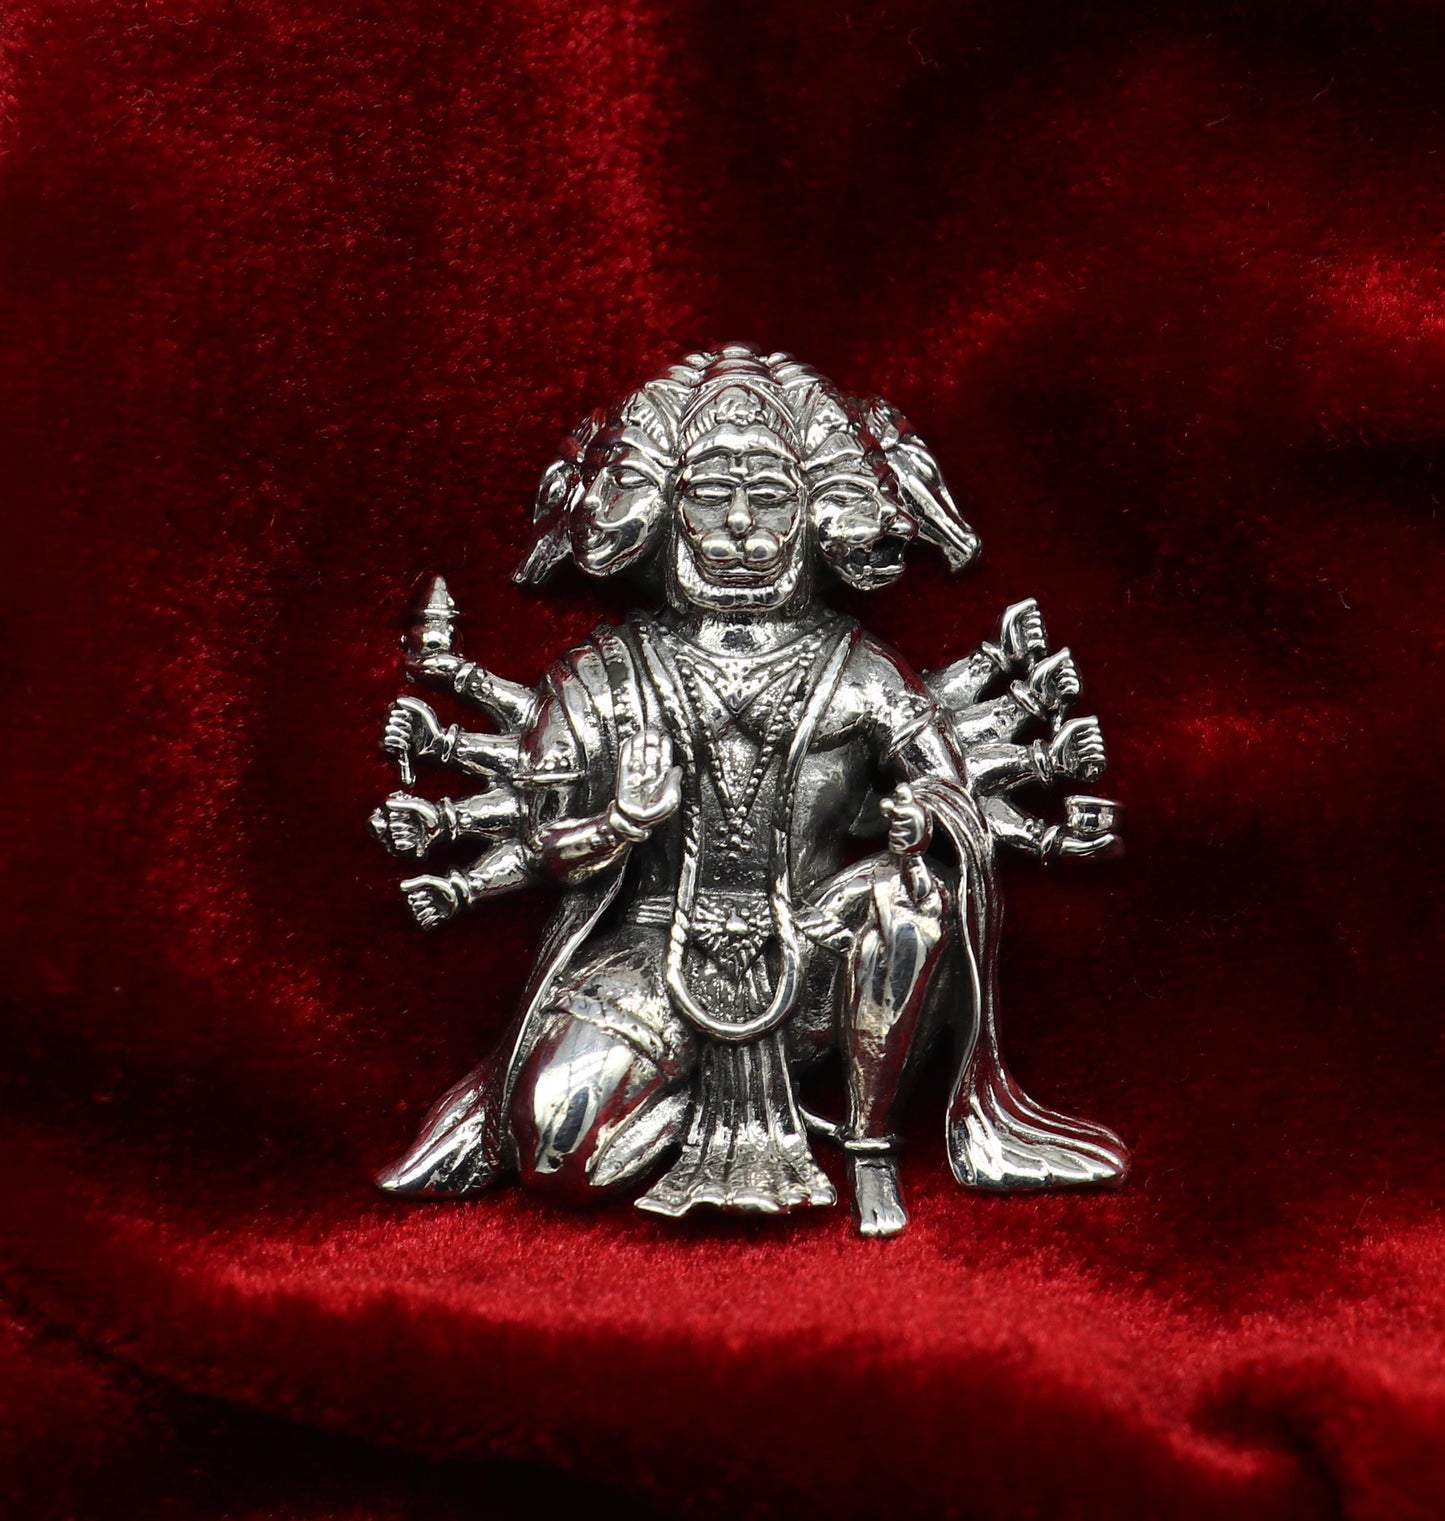 Pure 925 sterling silver handmade Hindu god Lord Panchmukhi Hanuman pendant, amazing designer fabulous pendant unisex gifting jewelry nsp449 - TRIBAL ORNAMENTS